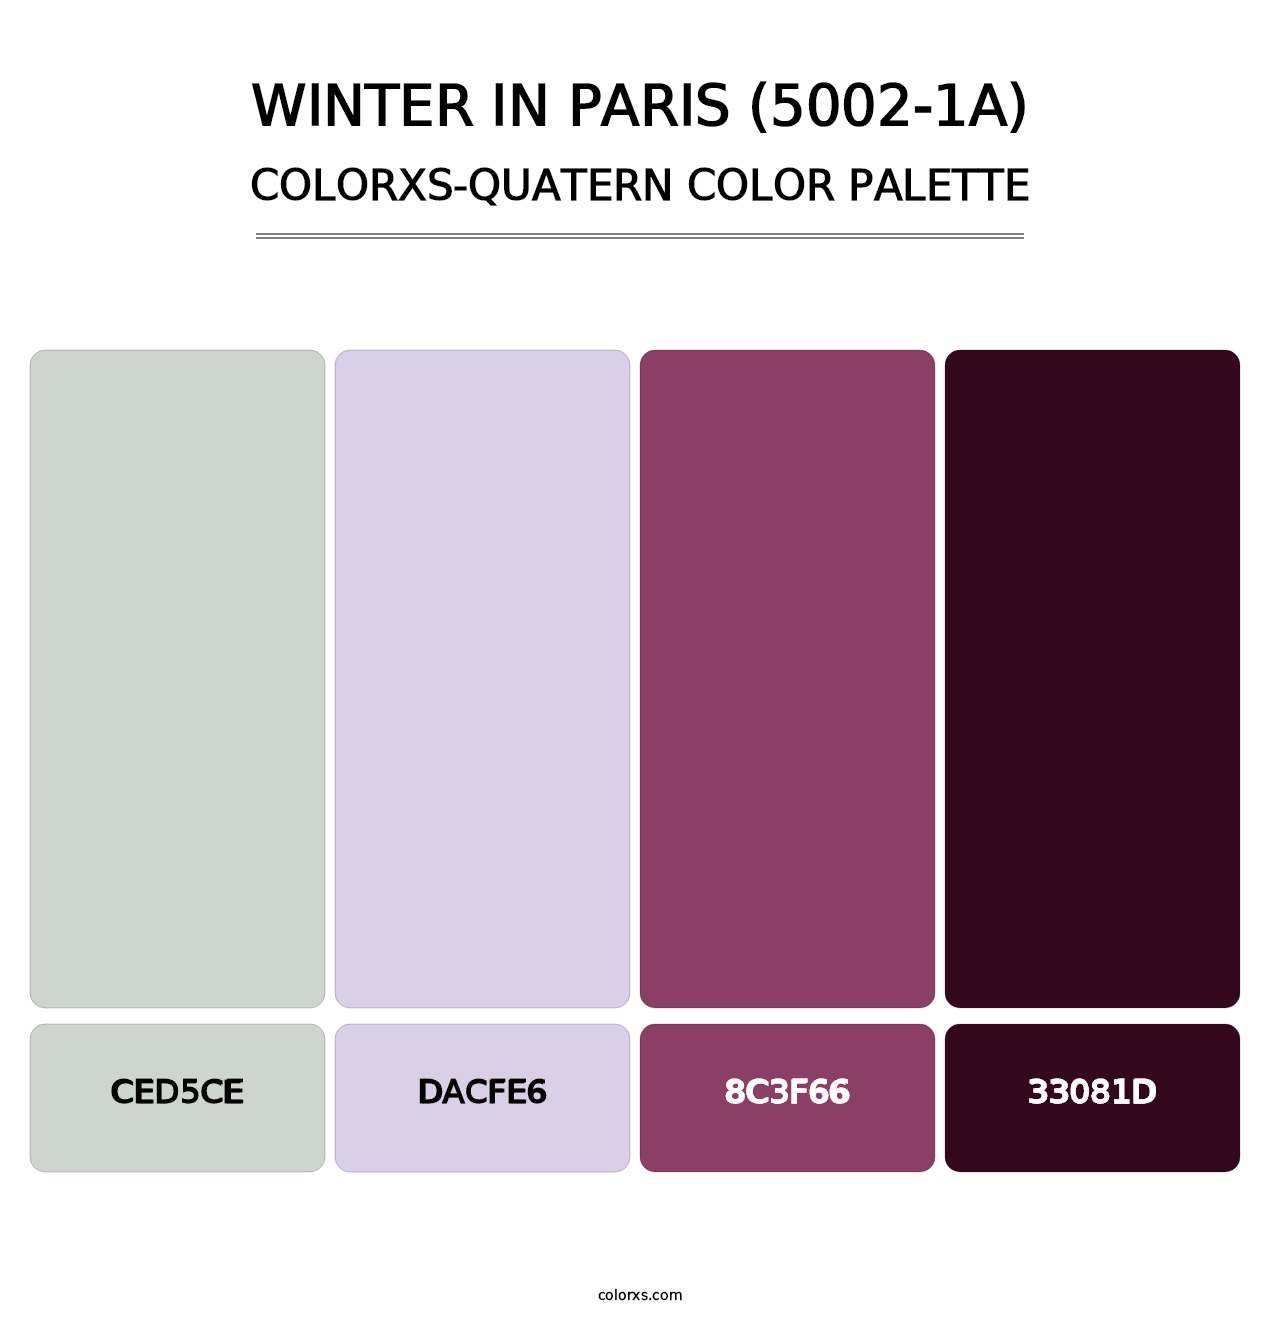 Winter in Paris (5002-1A) - Colorxs Quatern Palette